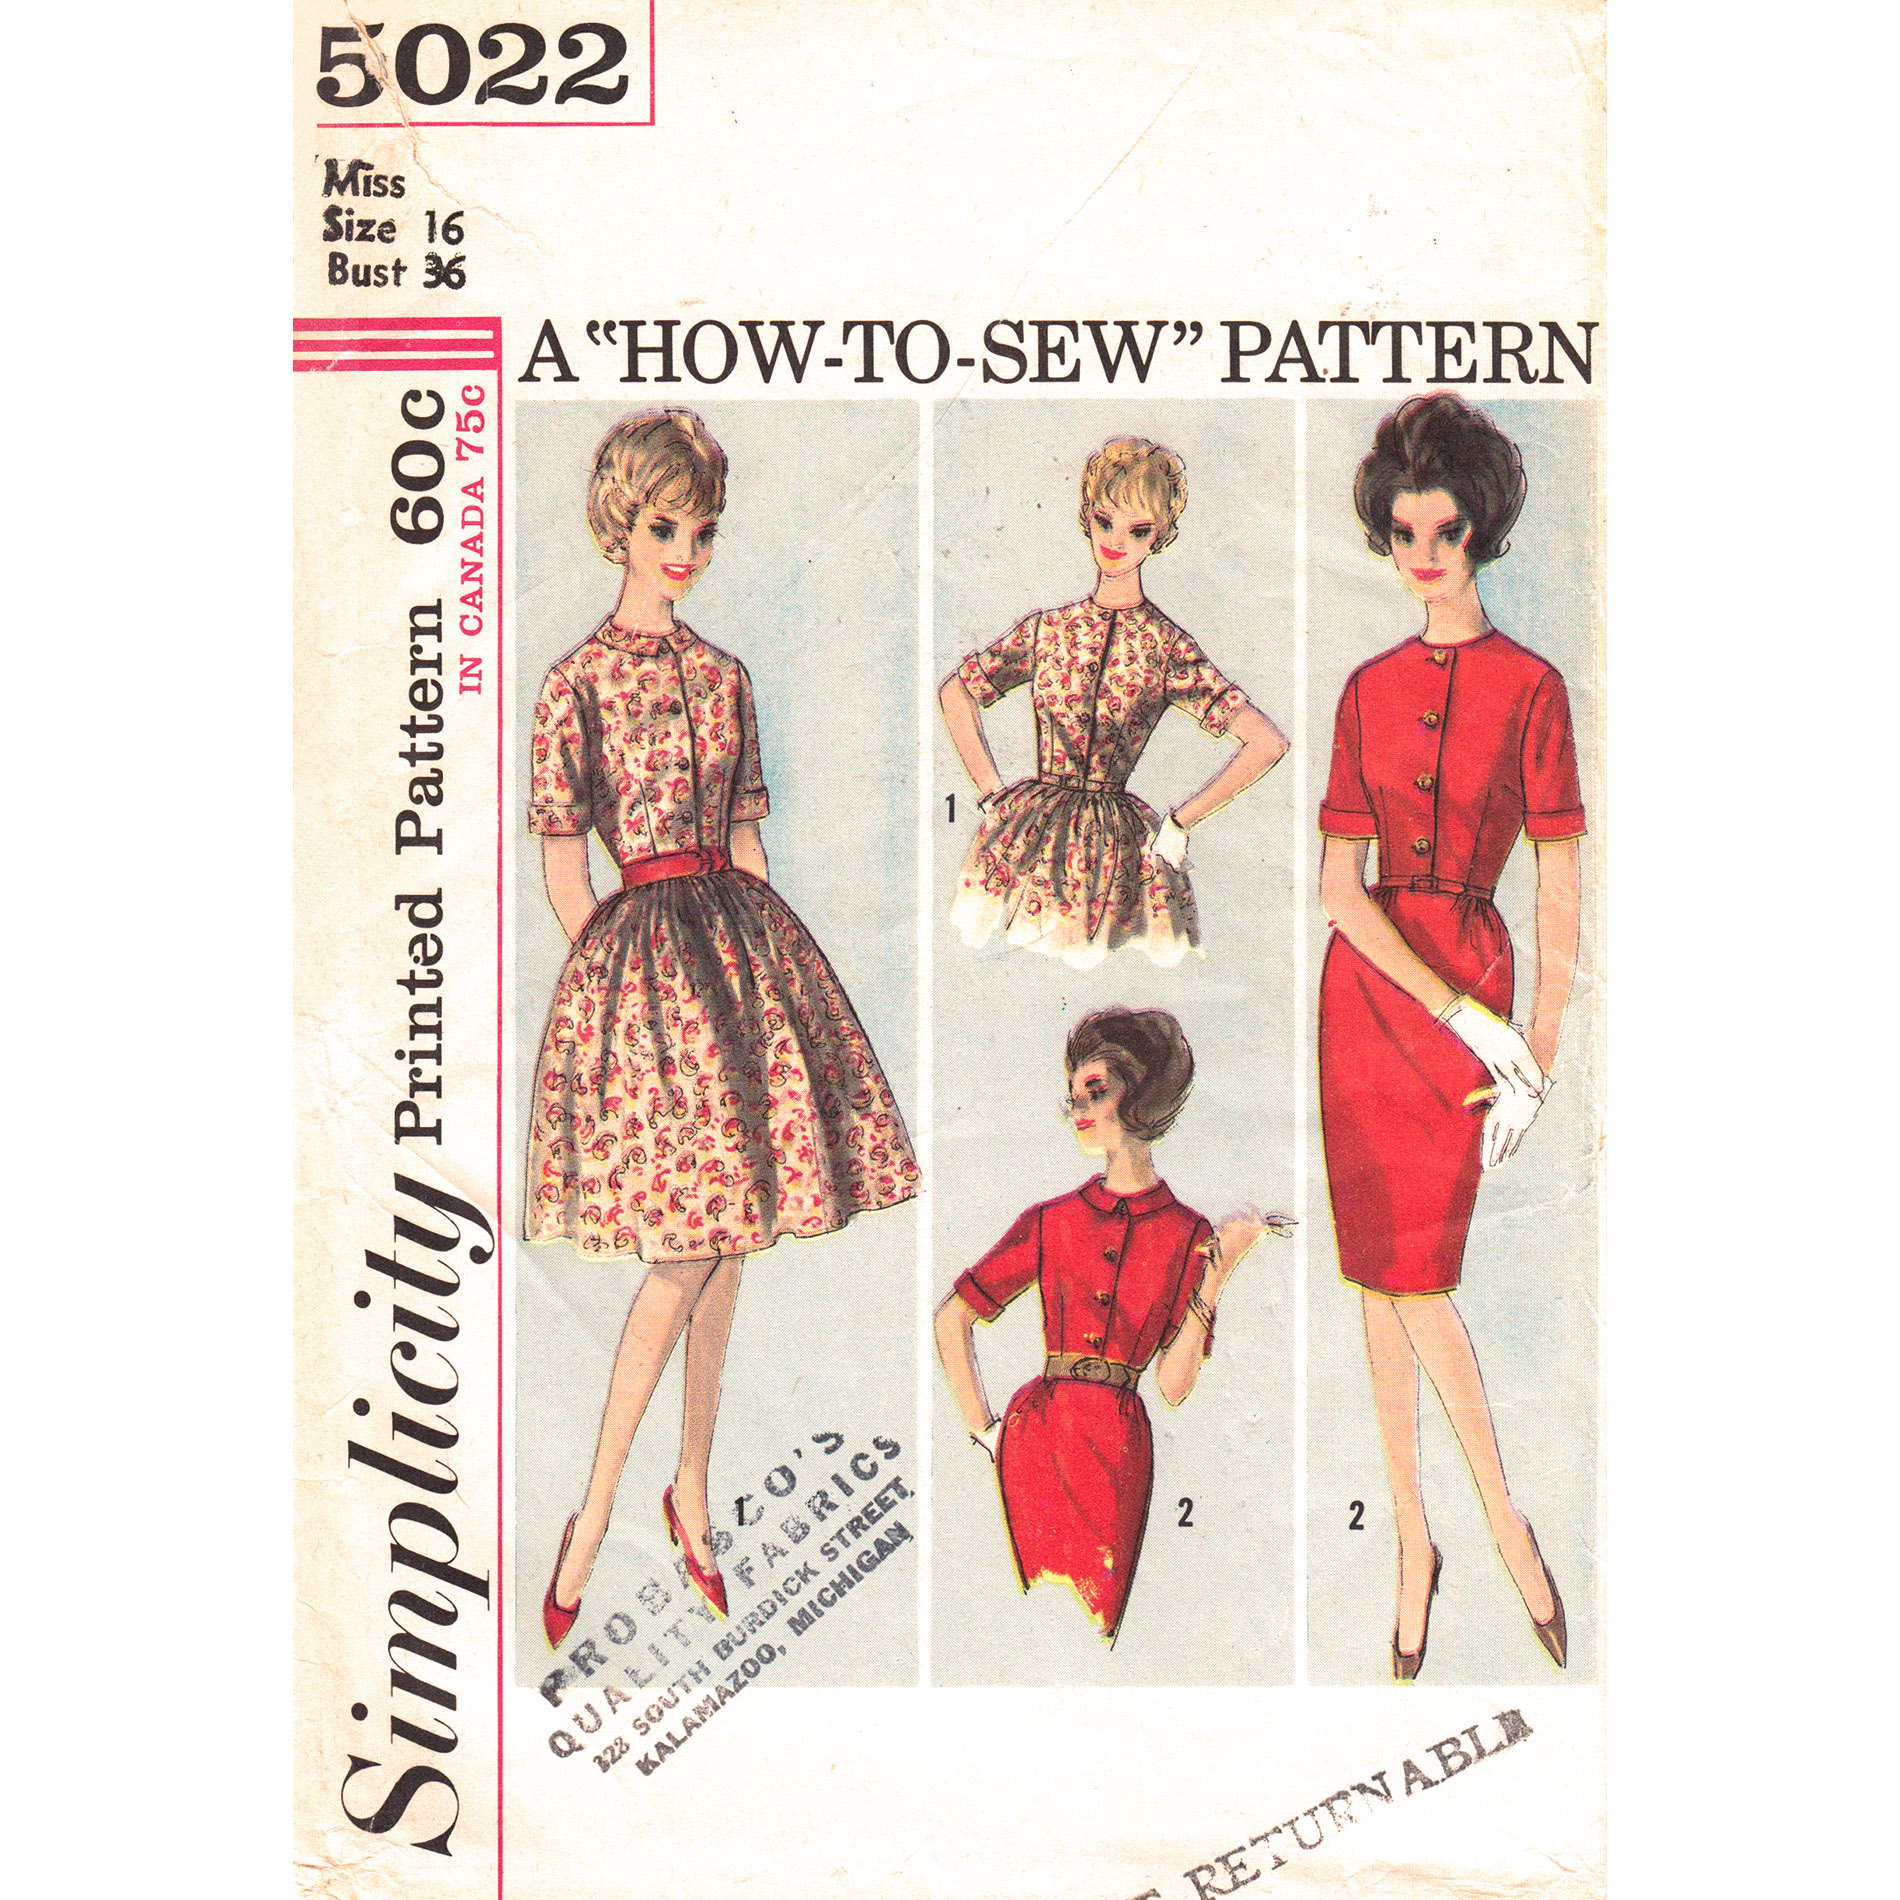 Simplicity 5022 dress pattern